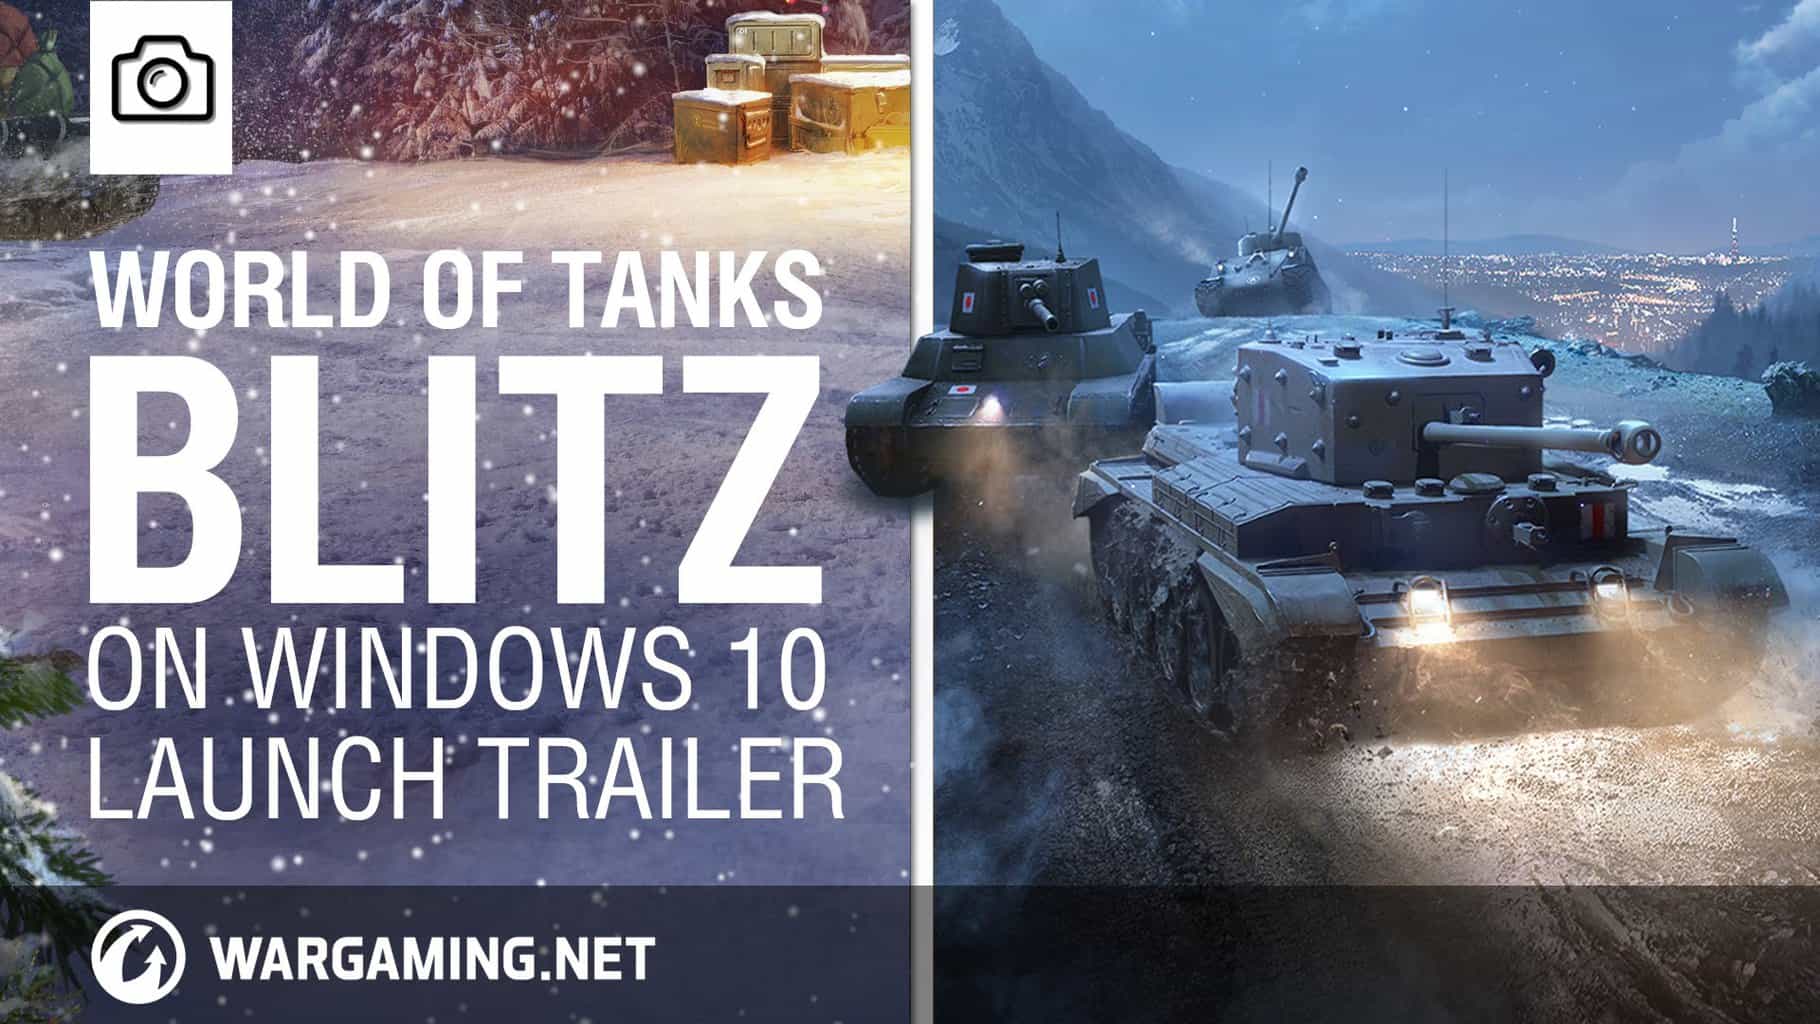 world of tanks blitz download freezing